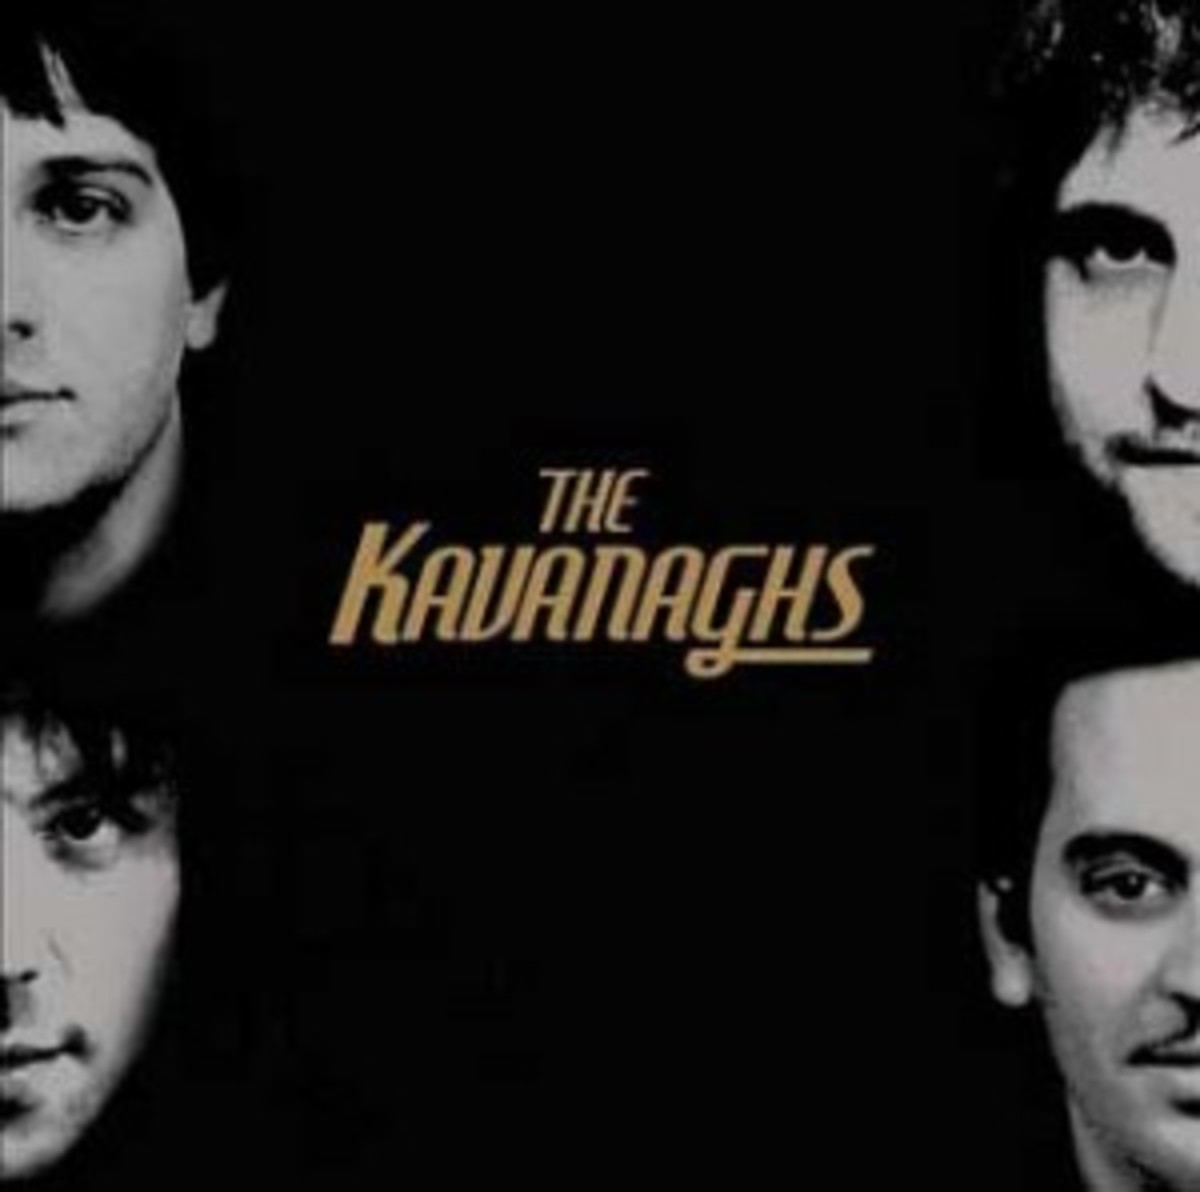 TheKavanaghs